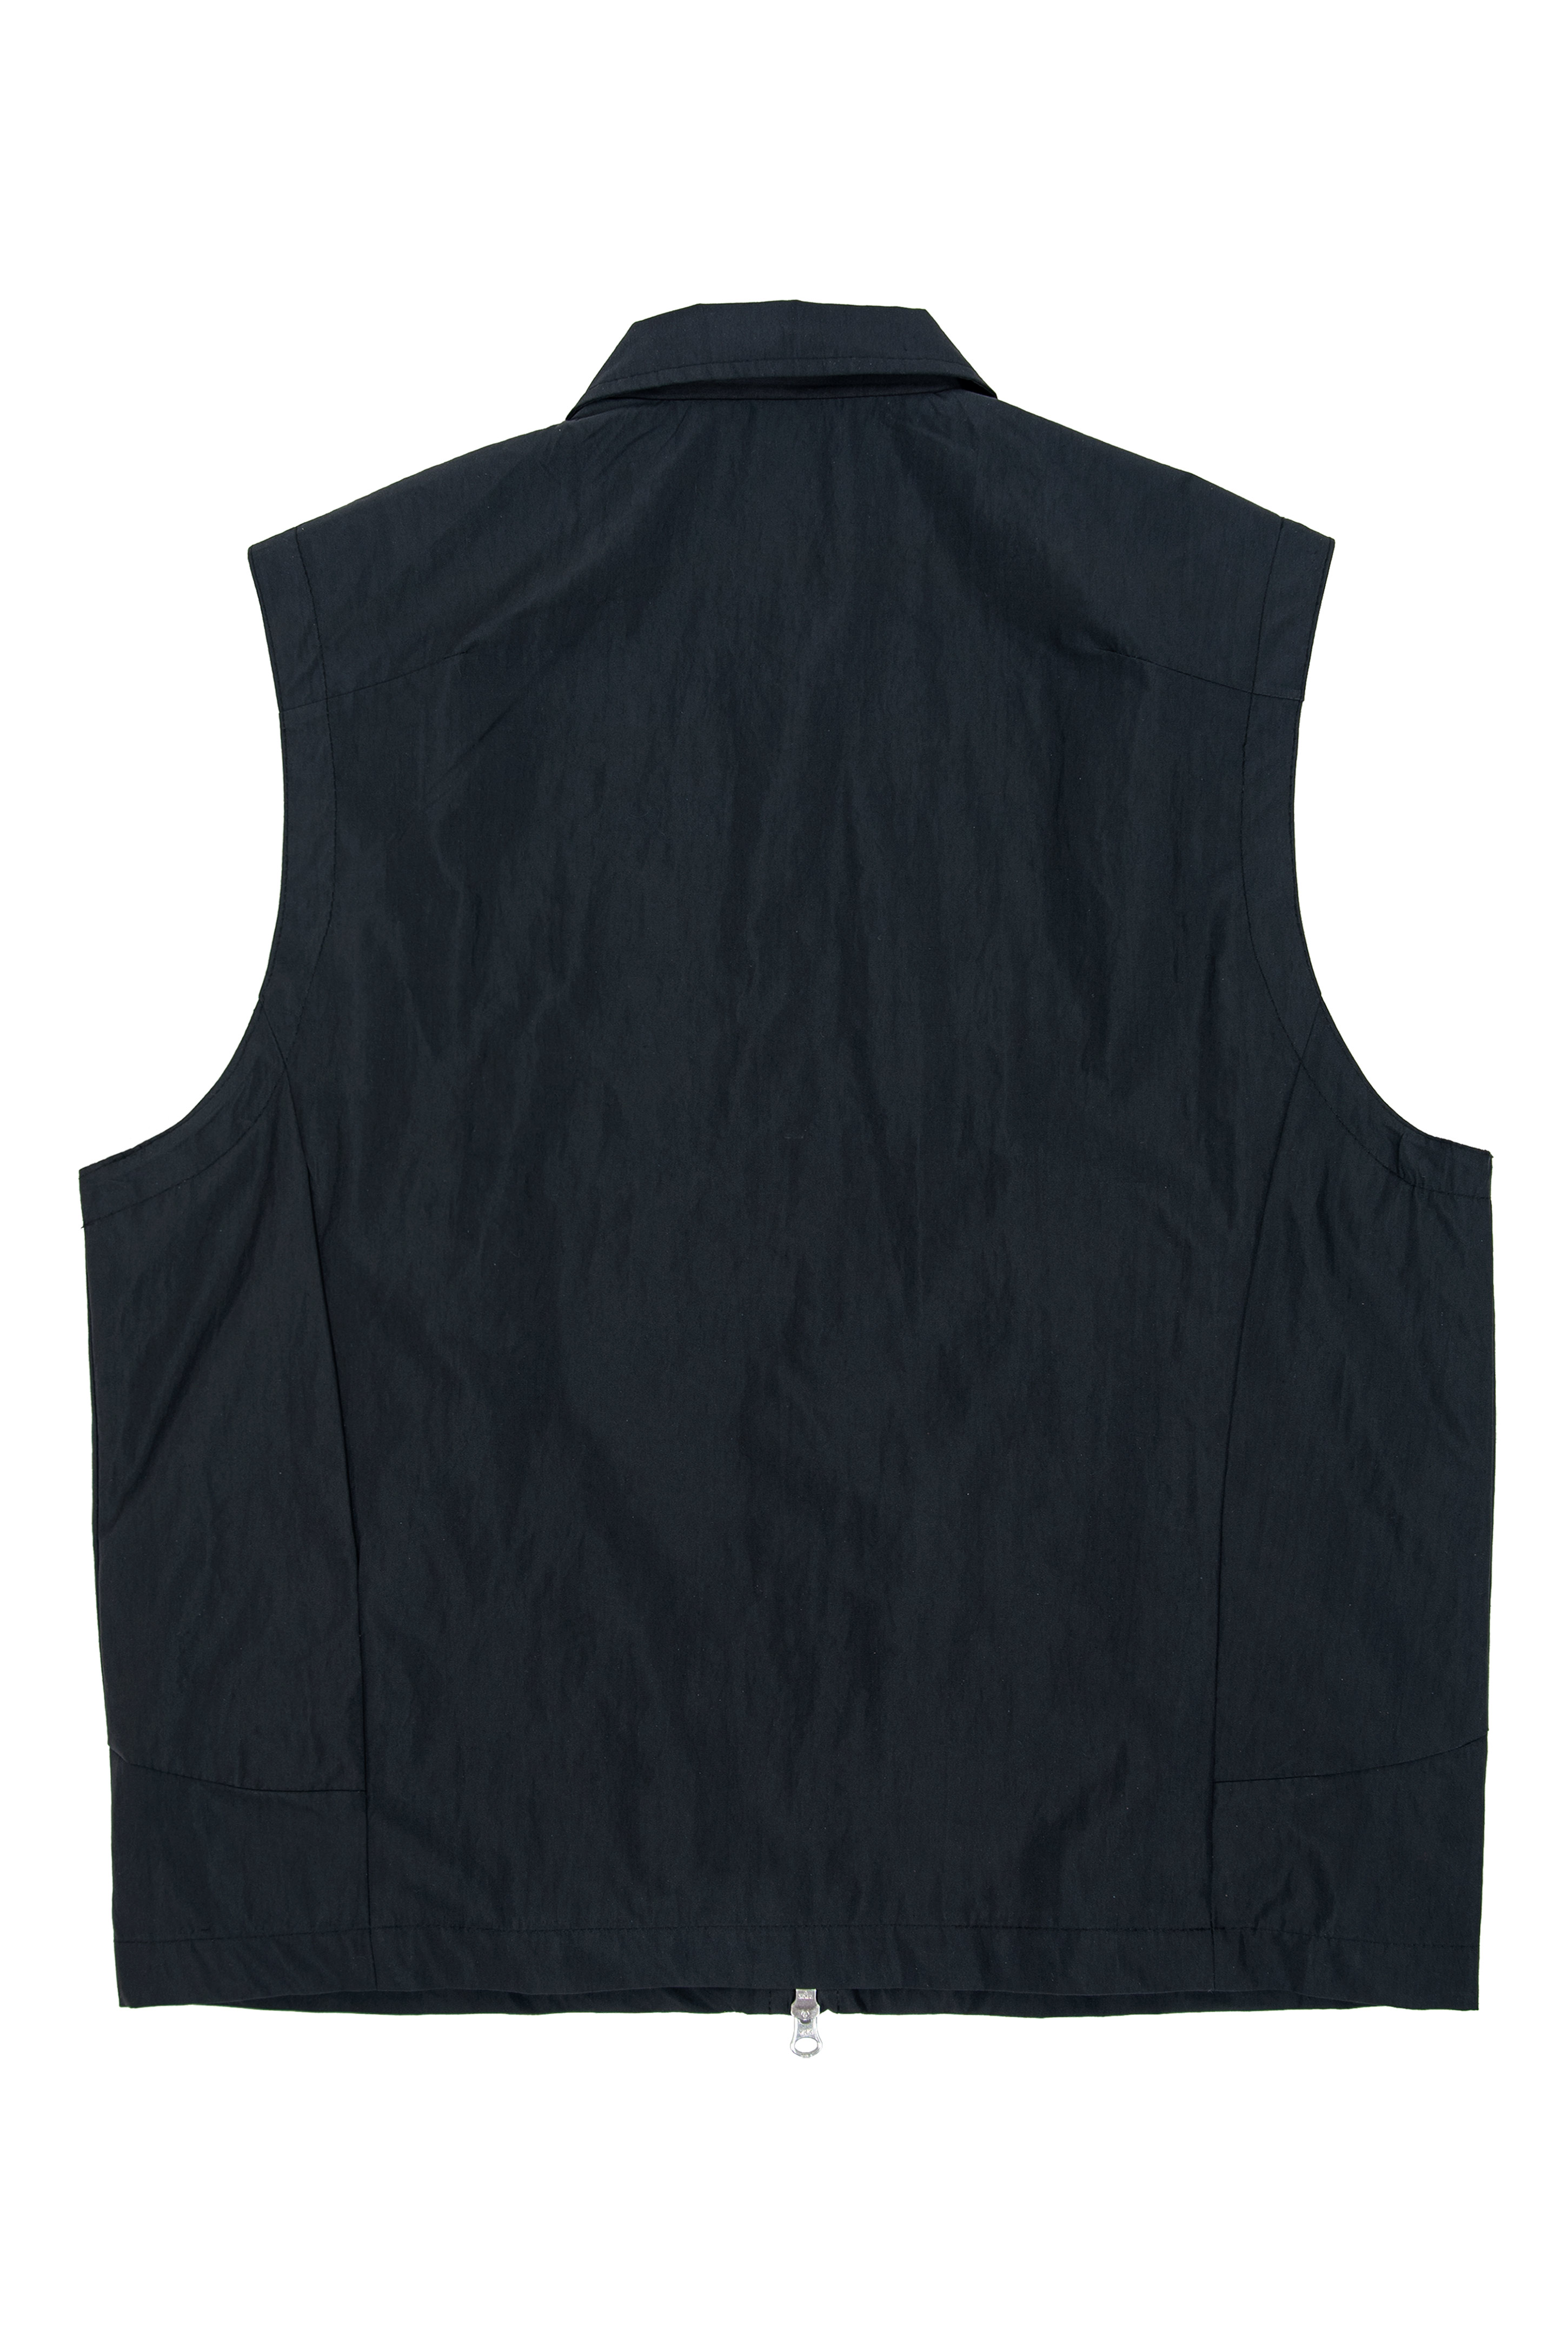 vest, utility three pockets, charcoal